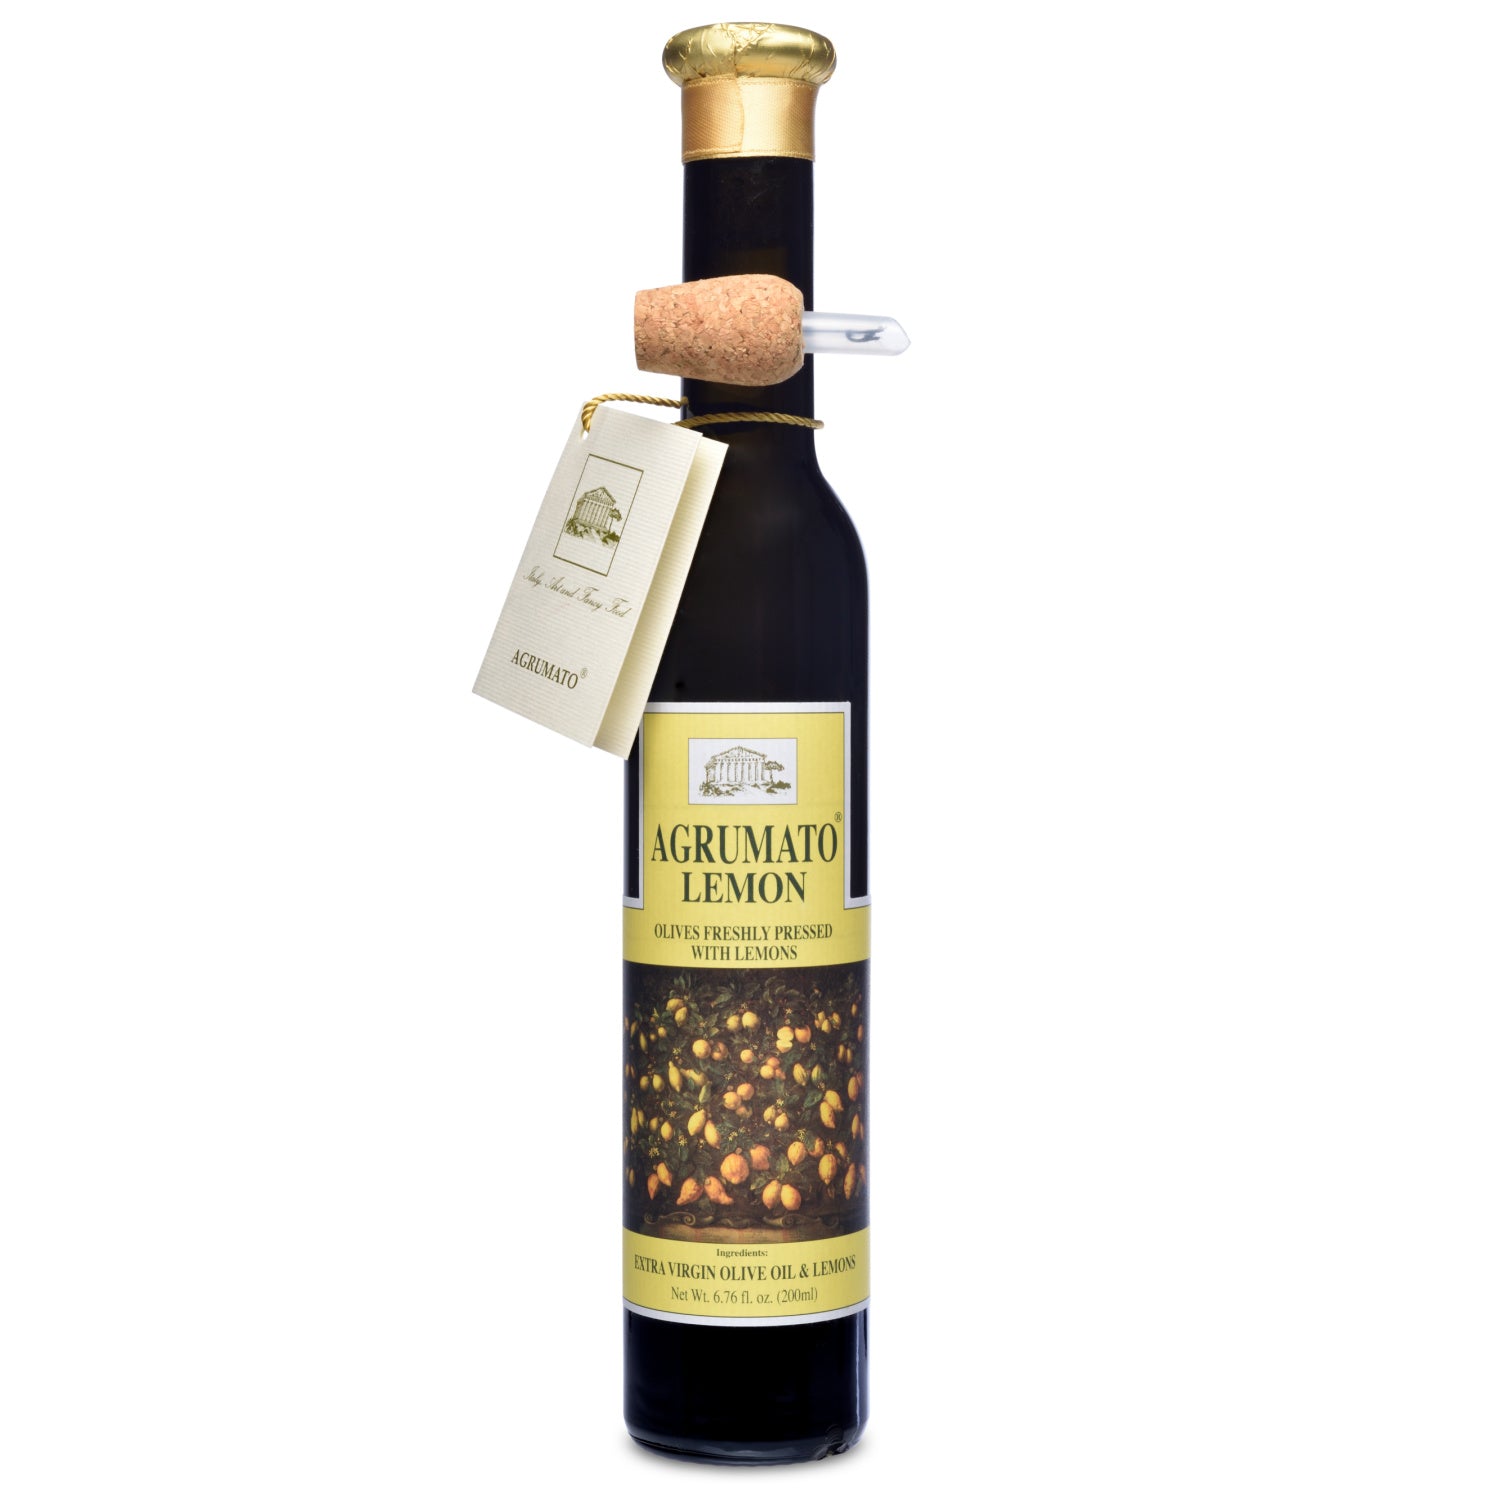 Agrumato Lemon Condimento Olive Oil 200 ml AGR-001